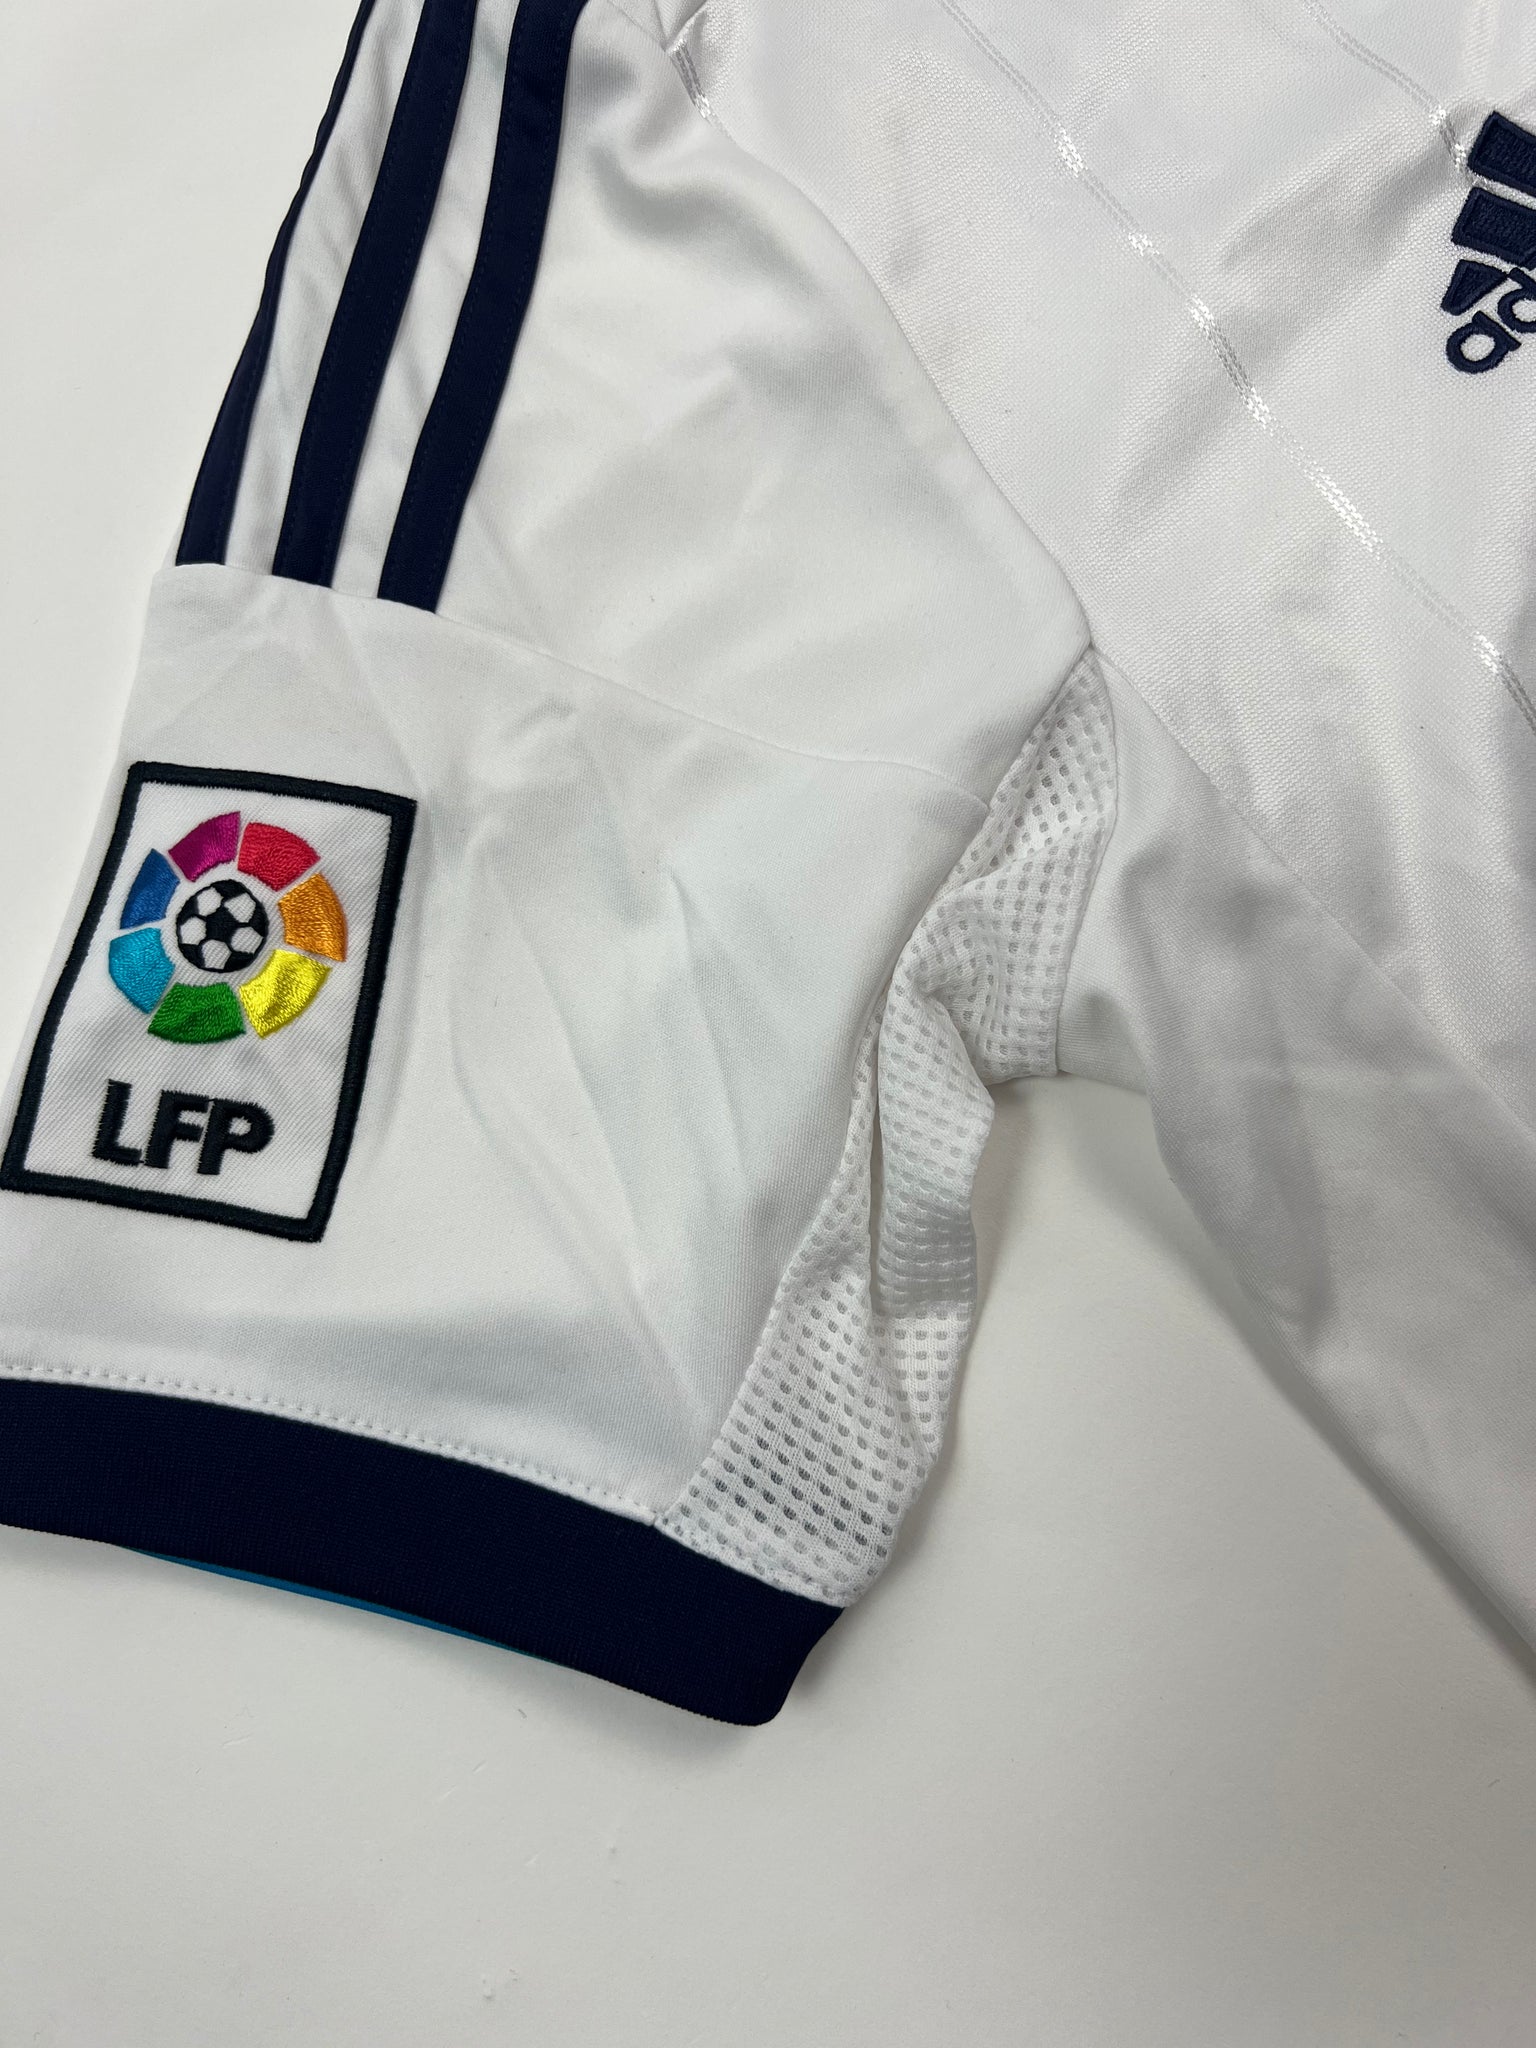 Adidas Real Madrid Jersey (S)